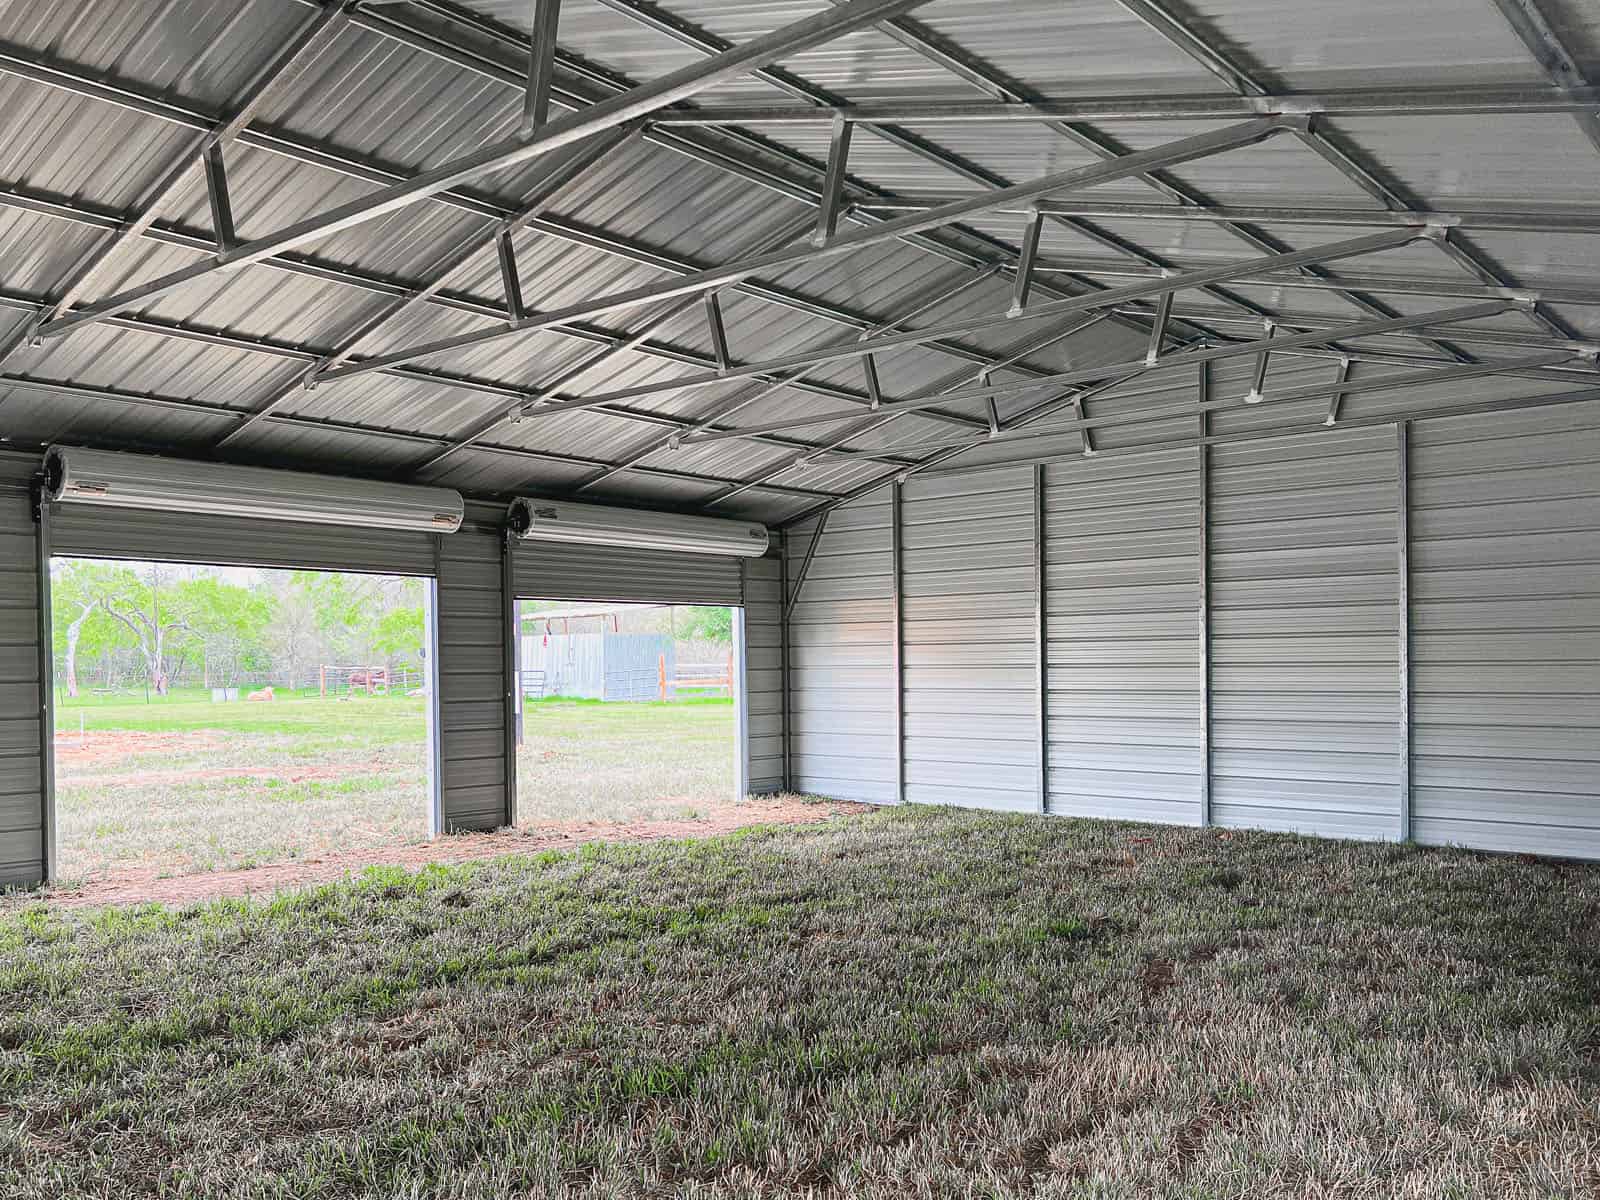 30x40 Vertical Roof Triple Wide Metal Garage - Alan's Factory Outlet